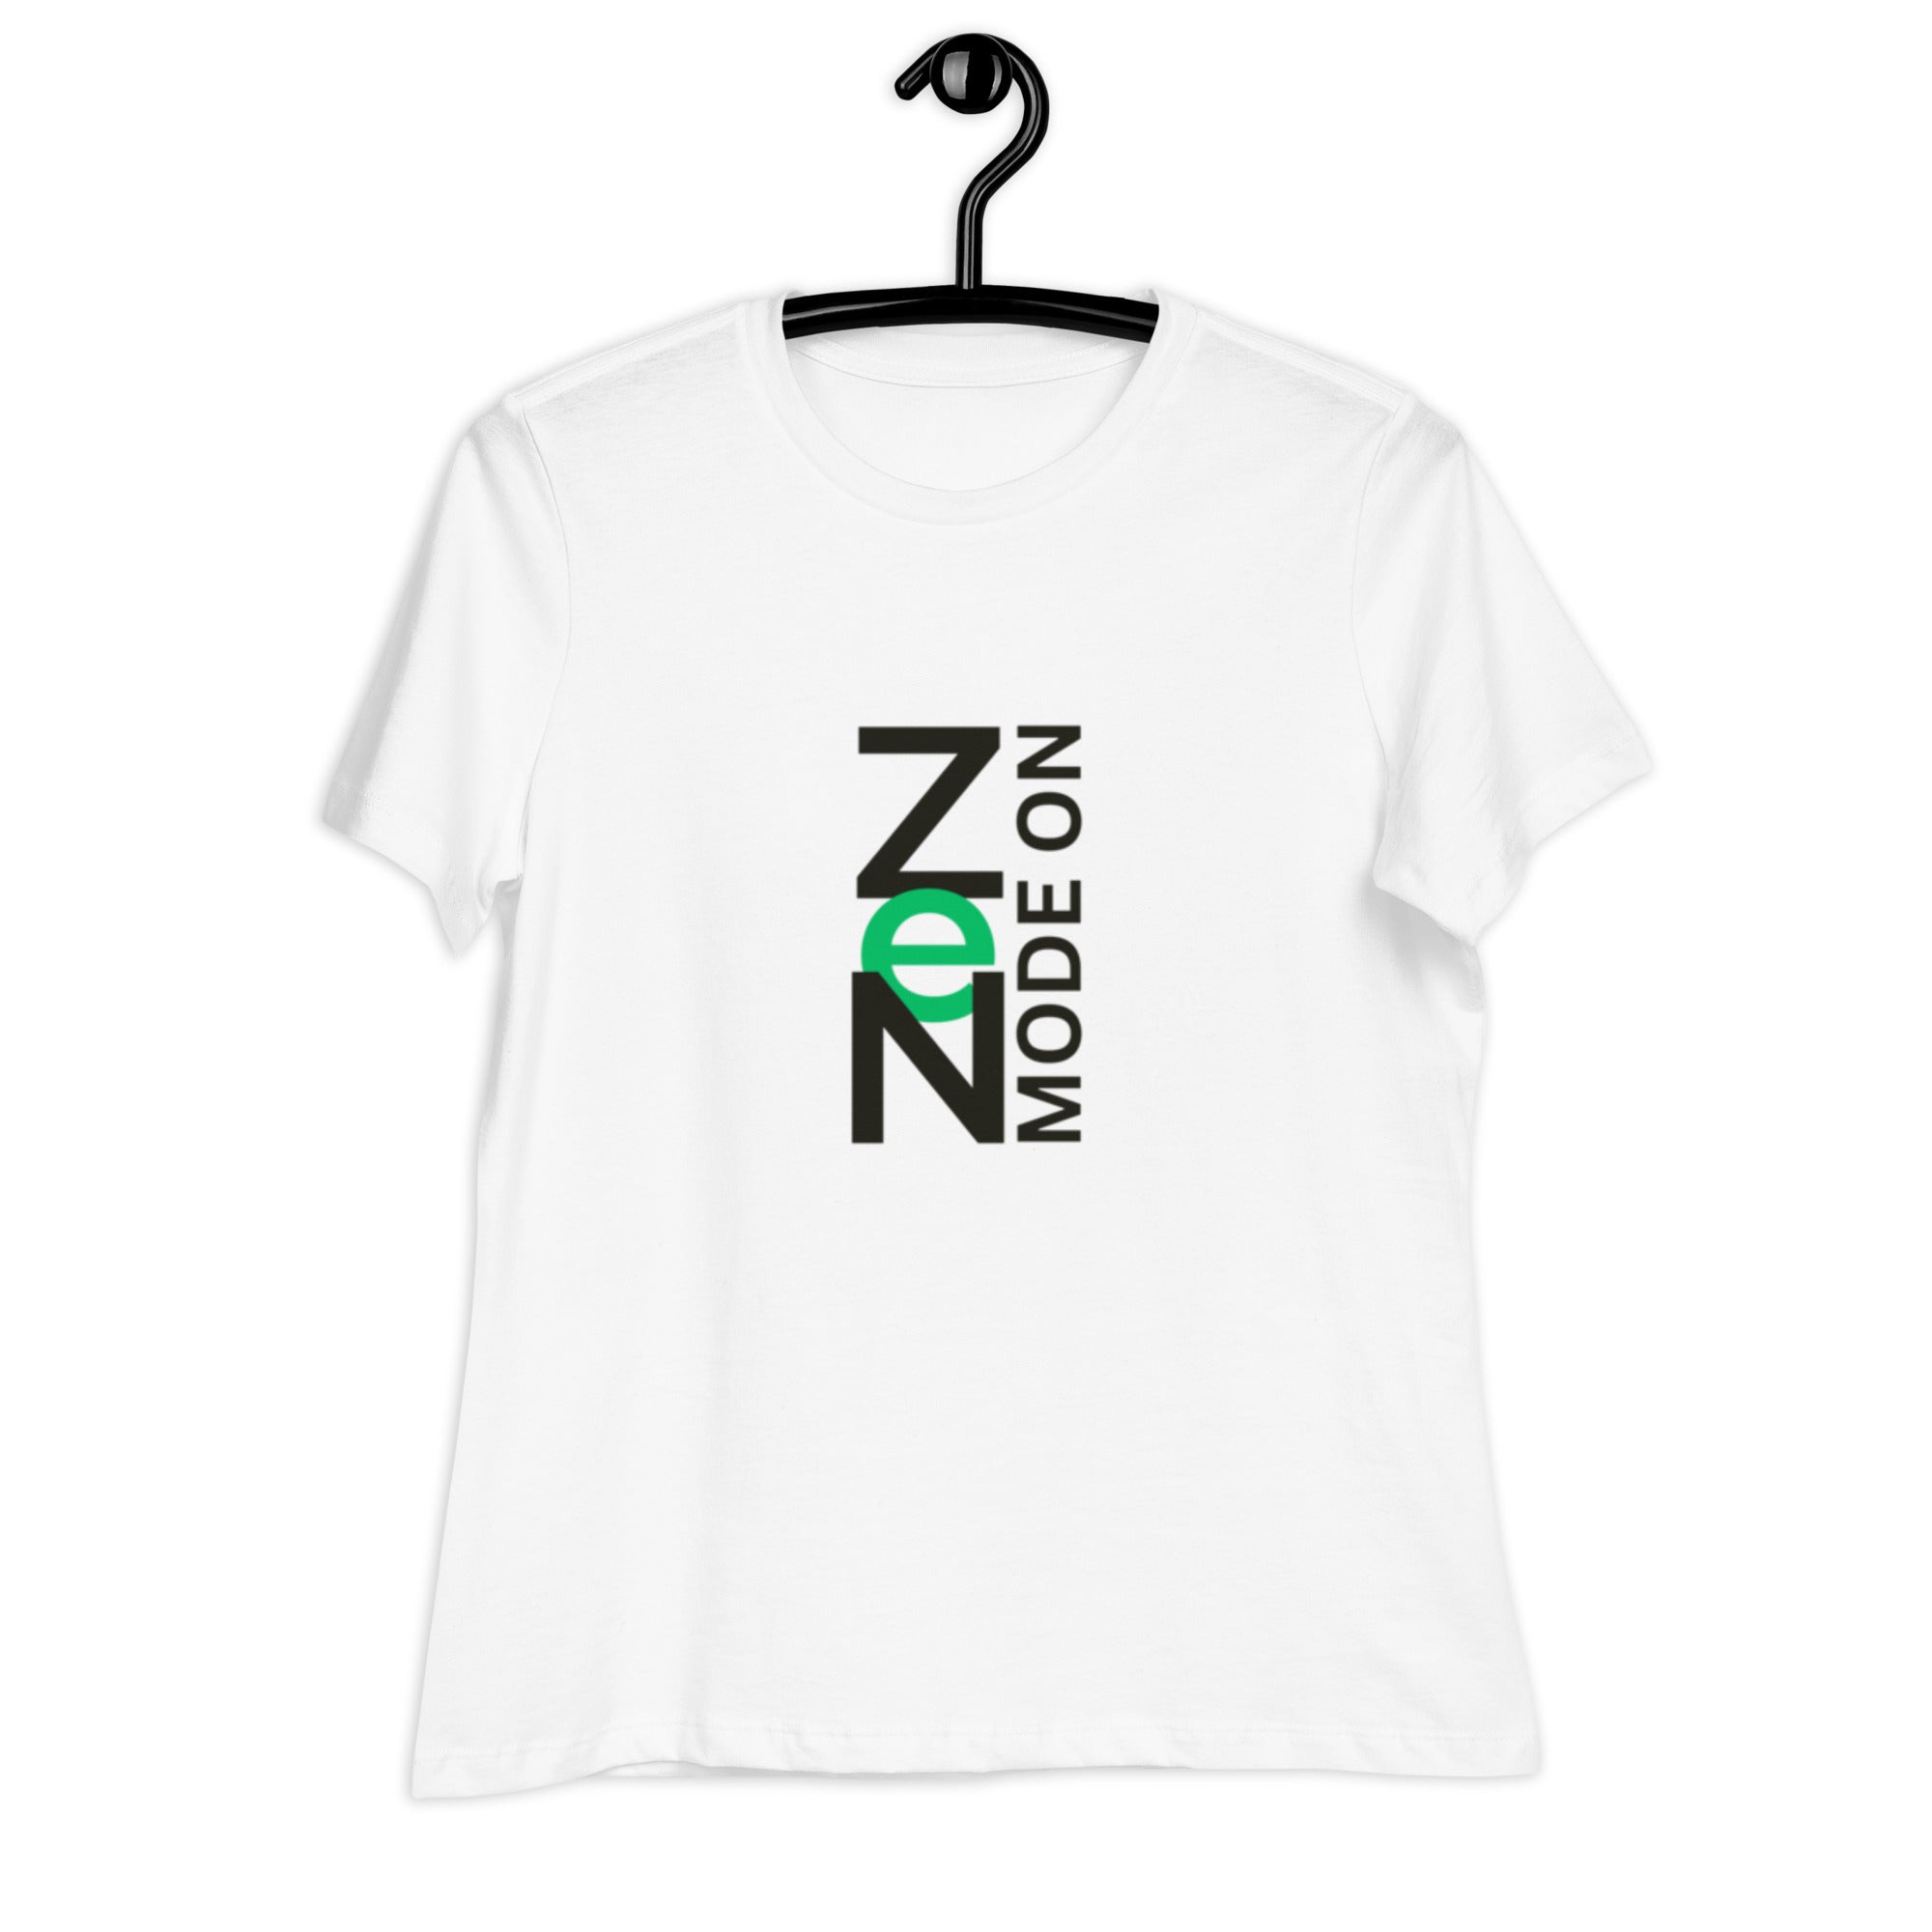 Zen Mode On Women's T-Shirt - POD SARTO